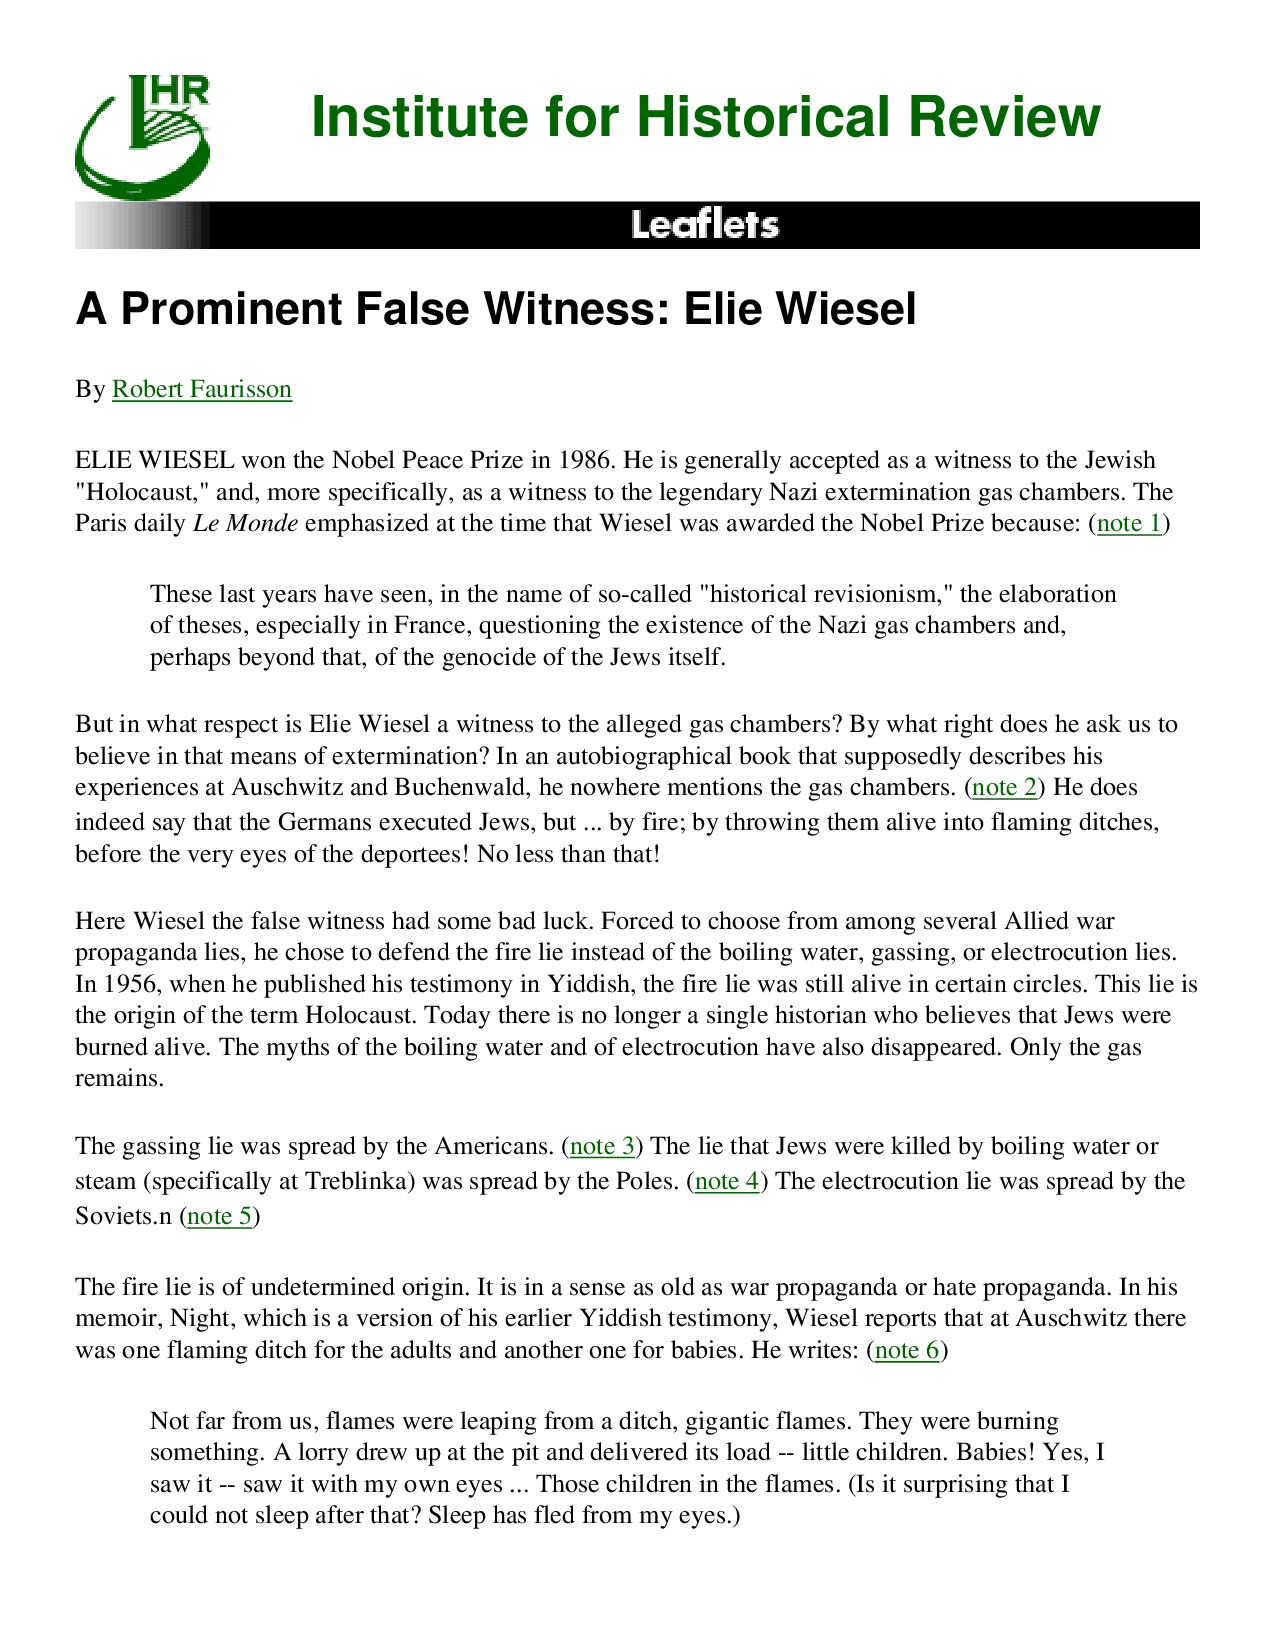 A Prominent False Witness: Elie Wiesel